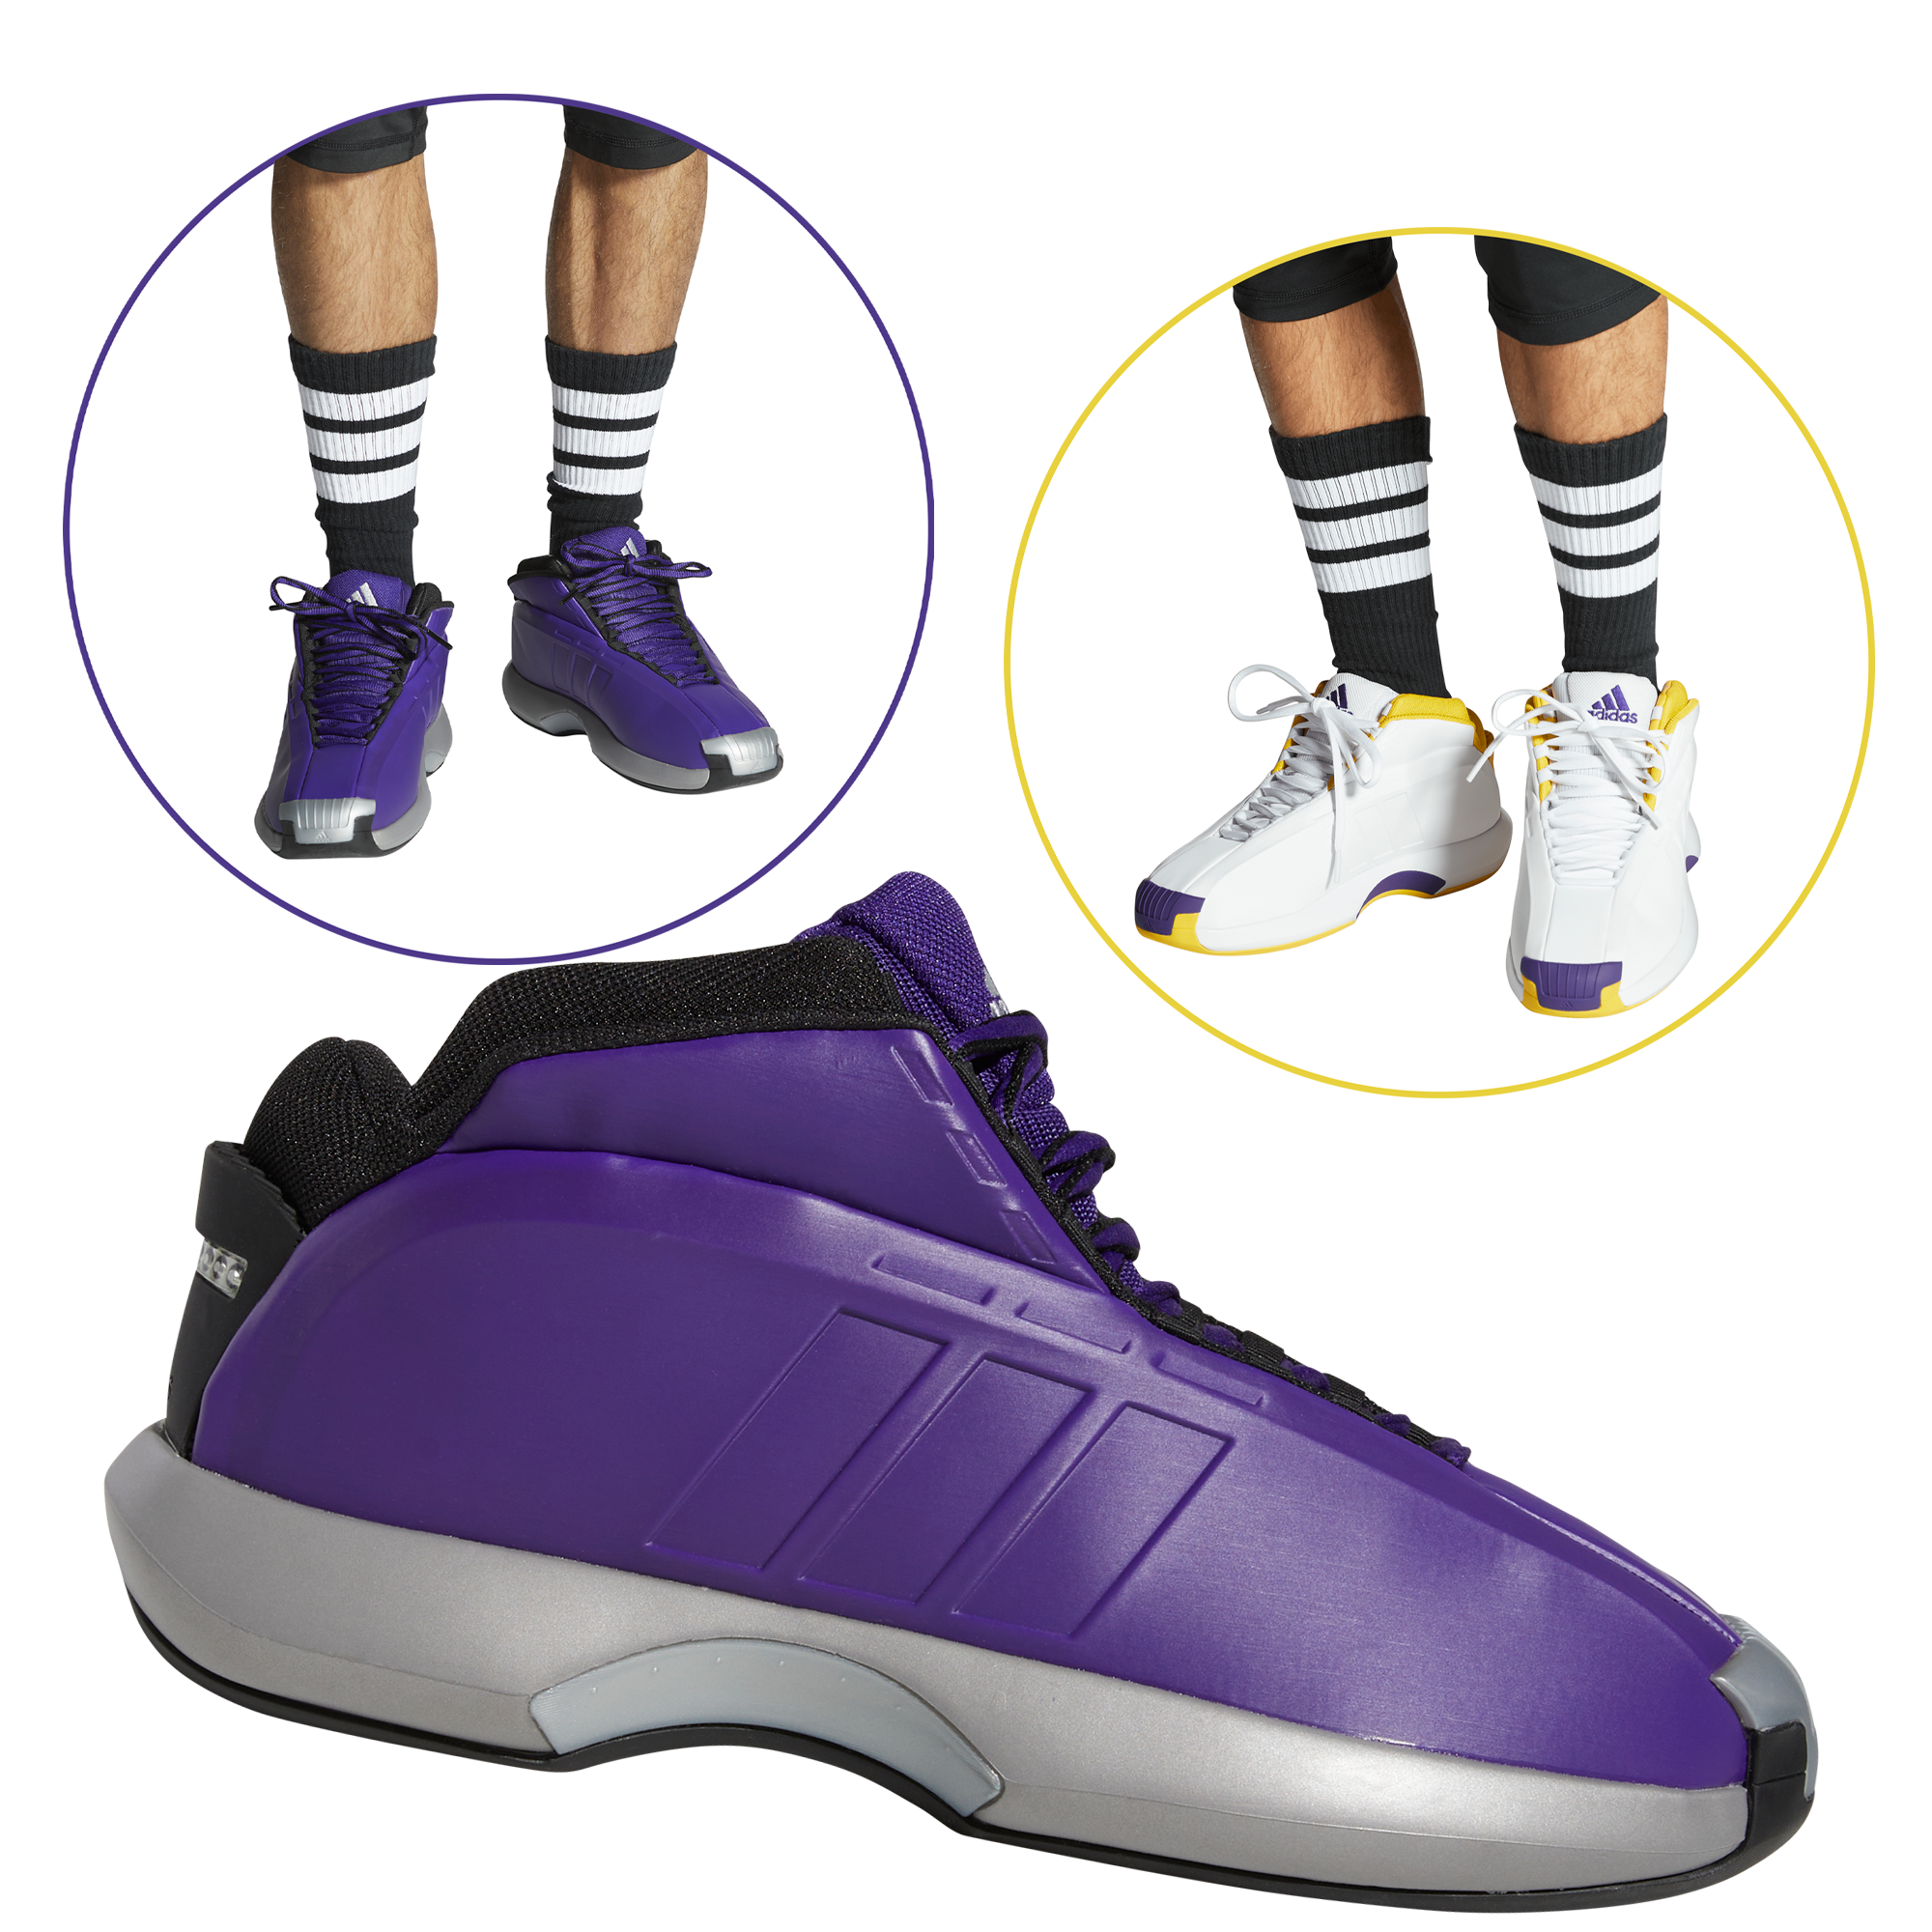 adidas Crazy1 Purple